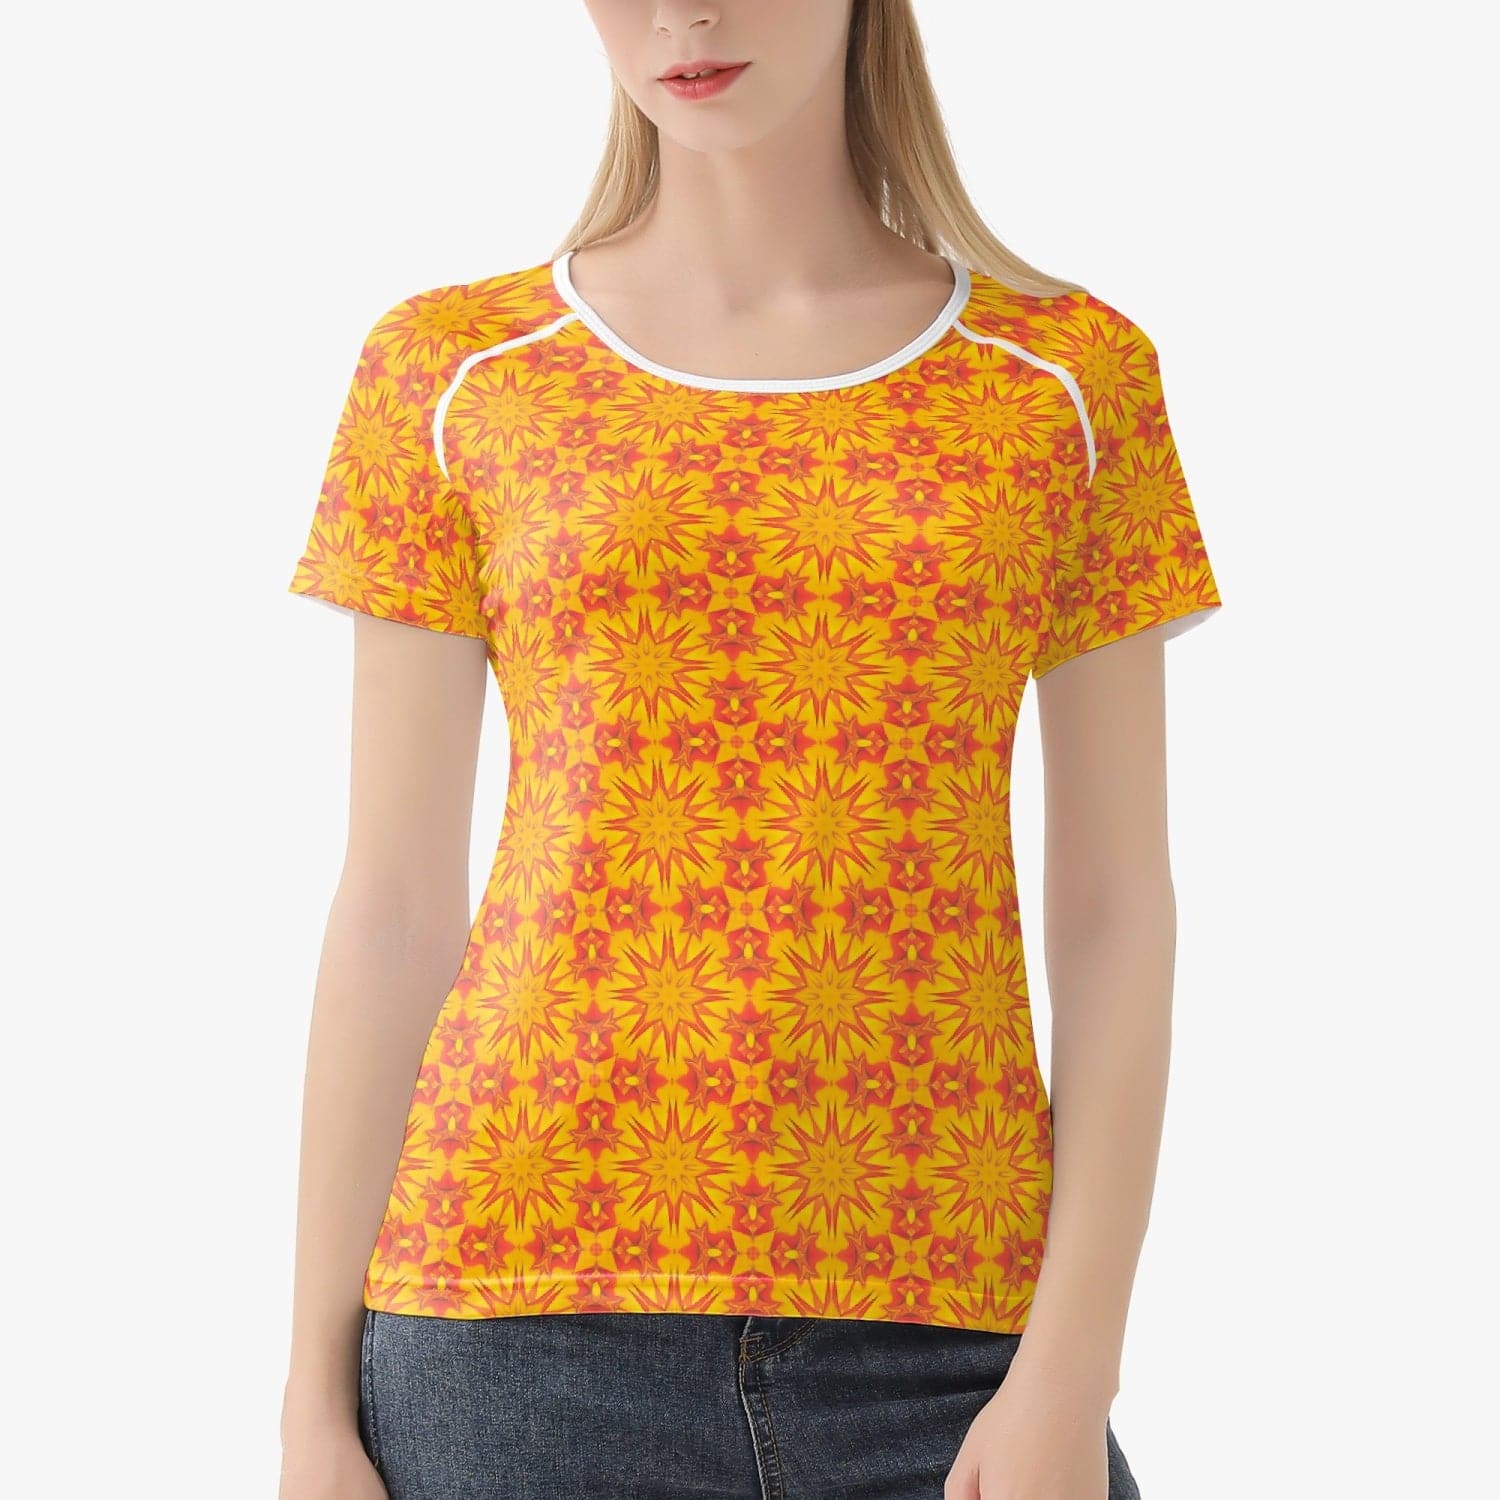 Solar Plexus  Handmade Yoga Top for  Women sports T-shirt, nby Sensus Studio Design